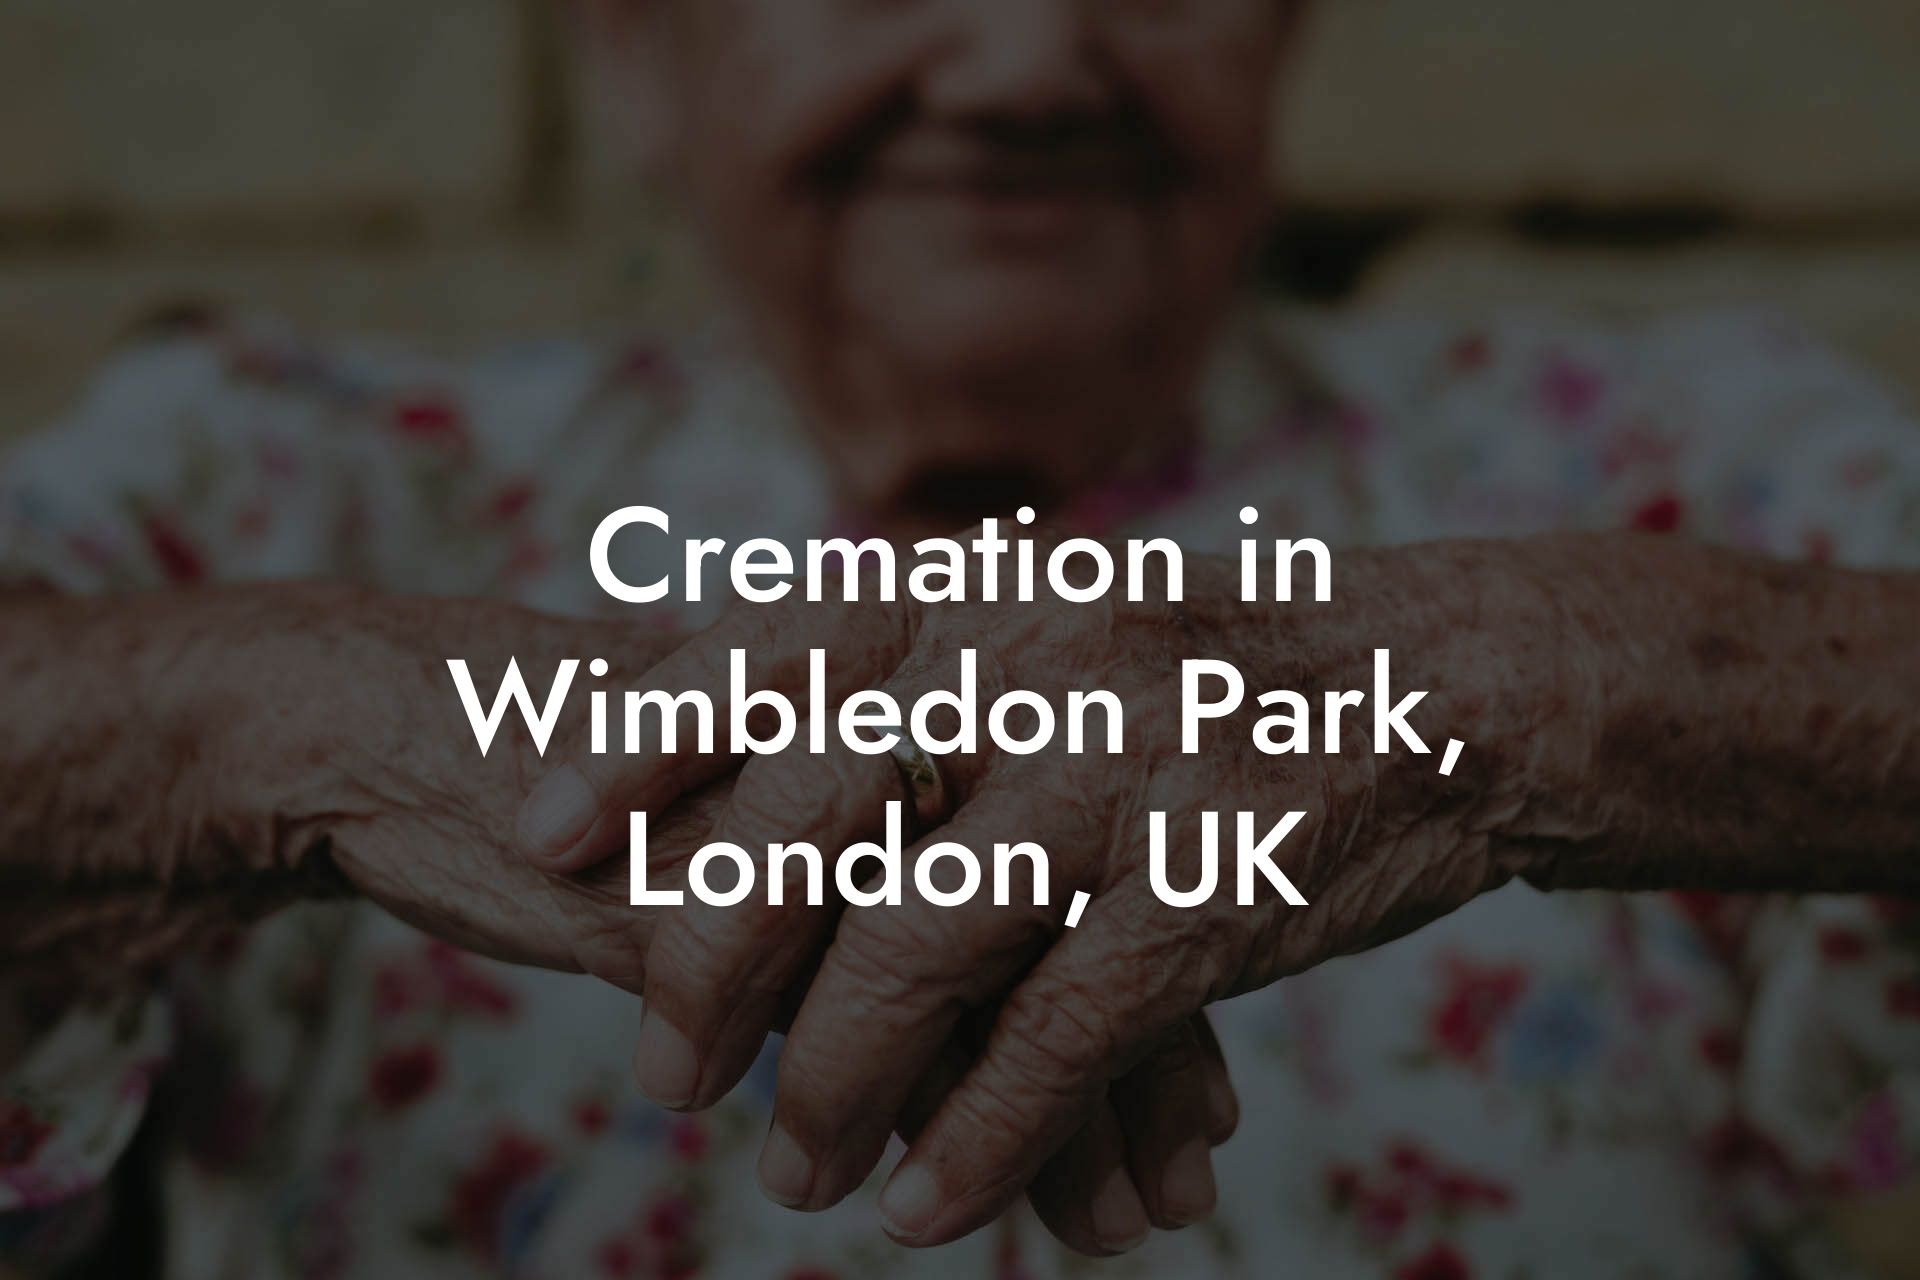 Cremation in Wimbledon Park, London, UK